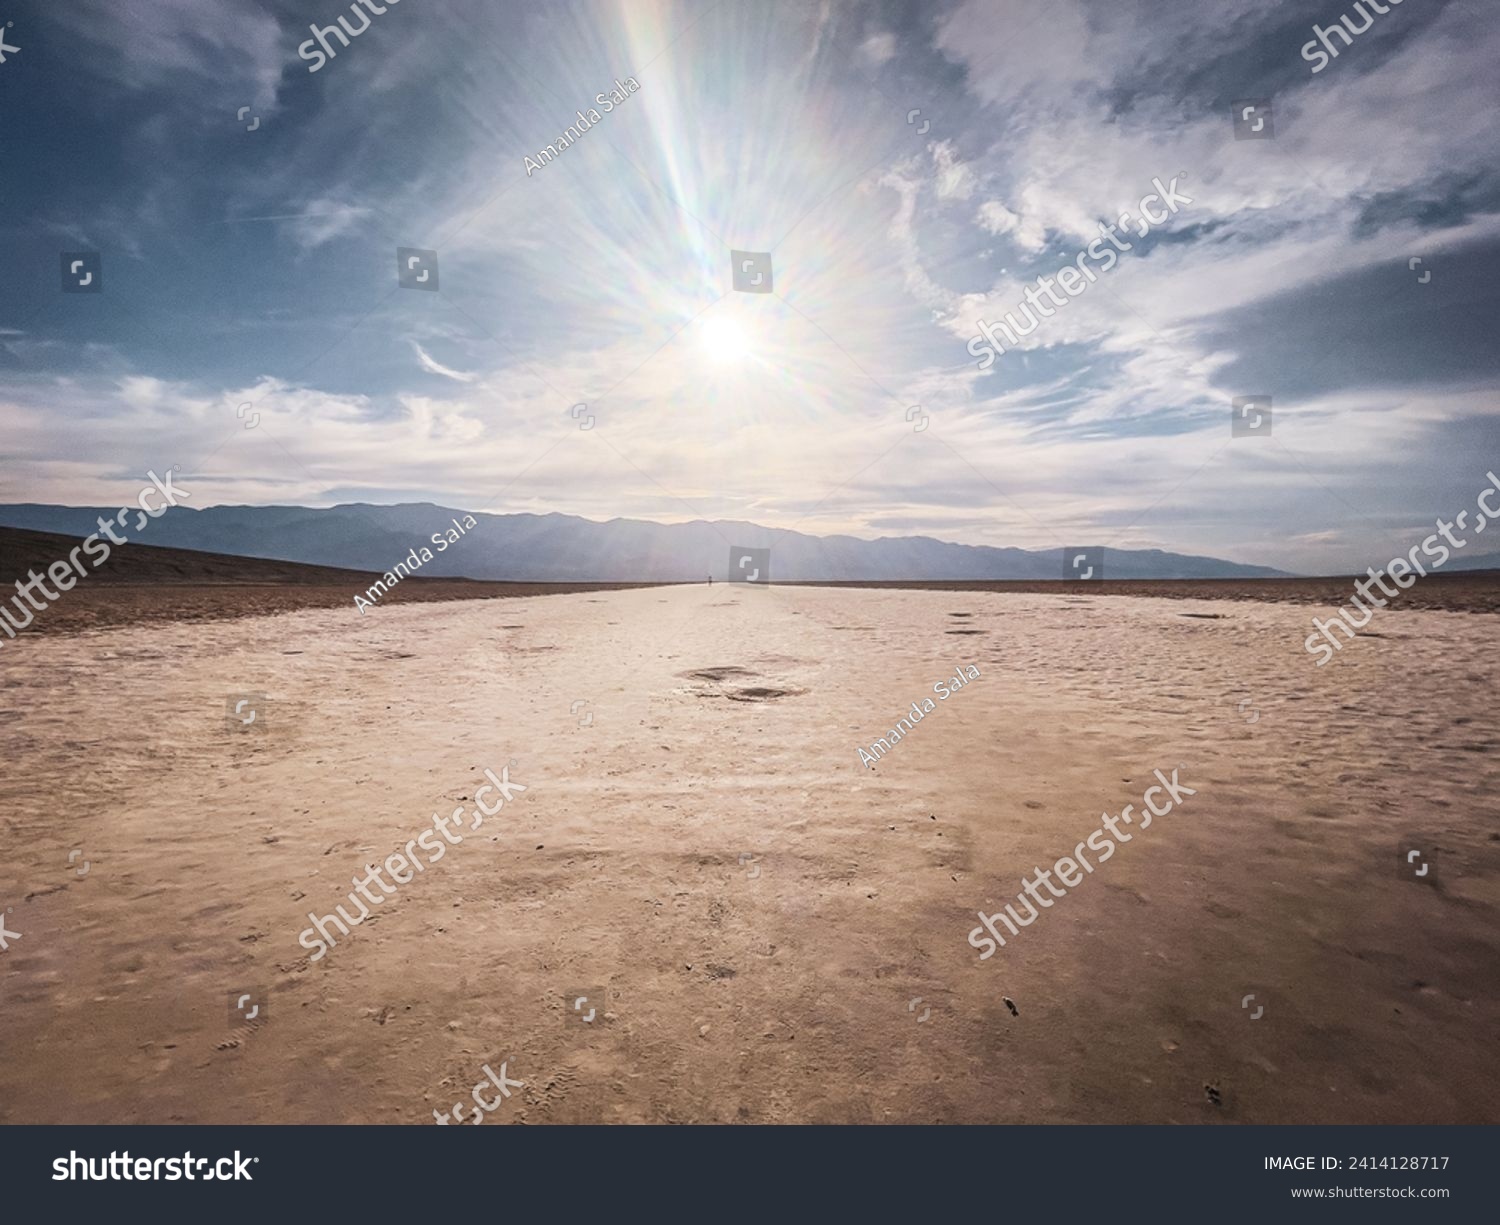 Death Valley Desert. National Park. Eastern California, Mojave Desert, The Great Basin Desert. The hottest place on Earth. #2414128717